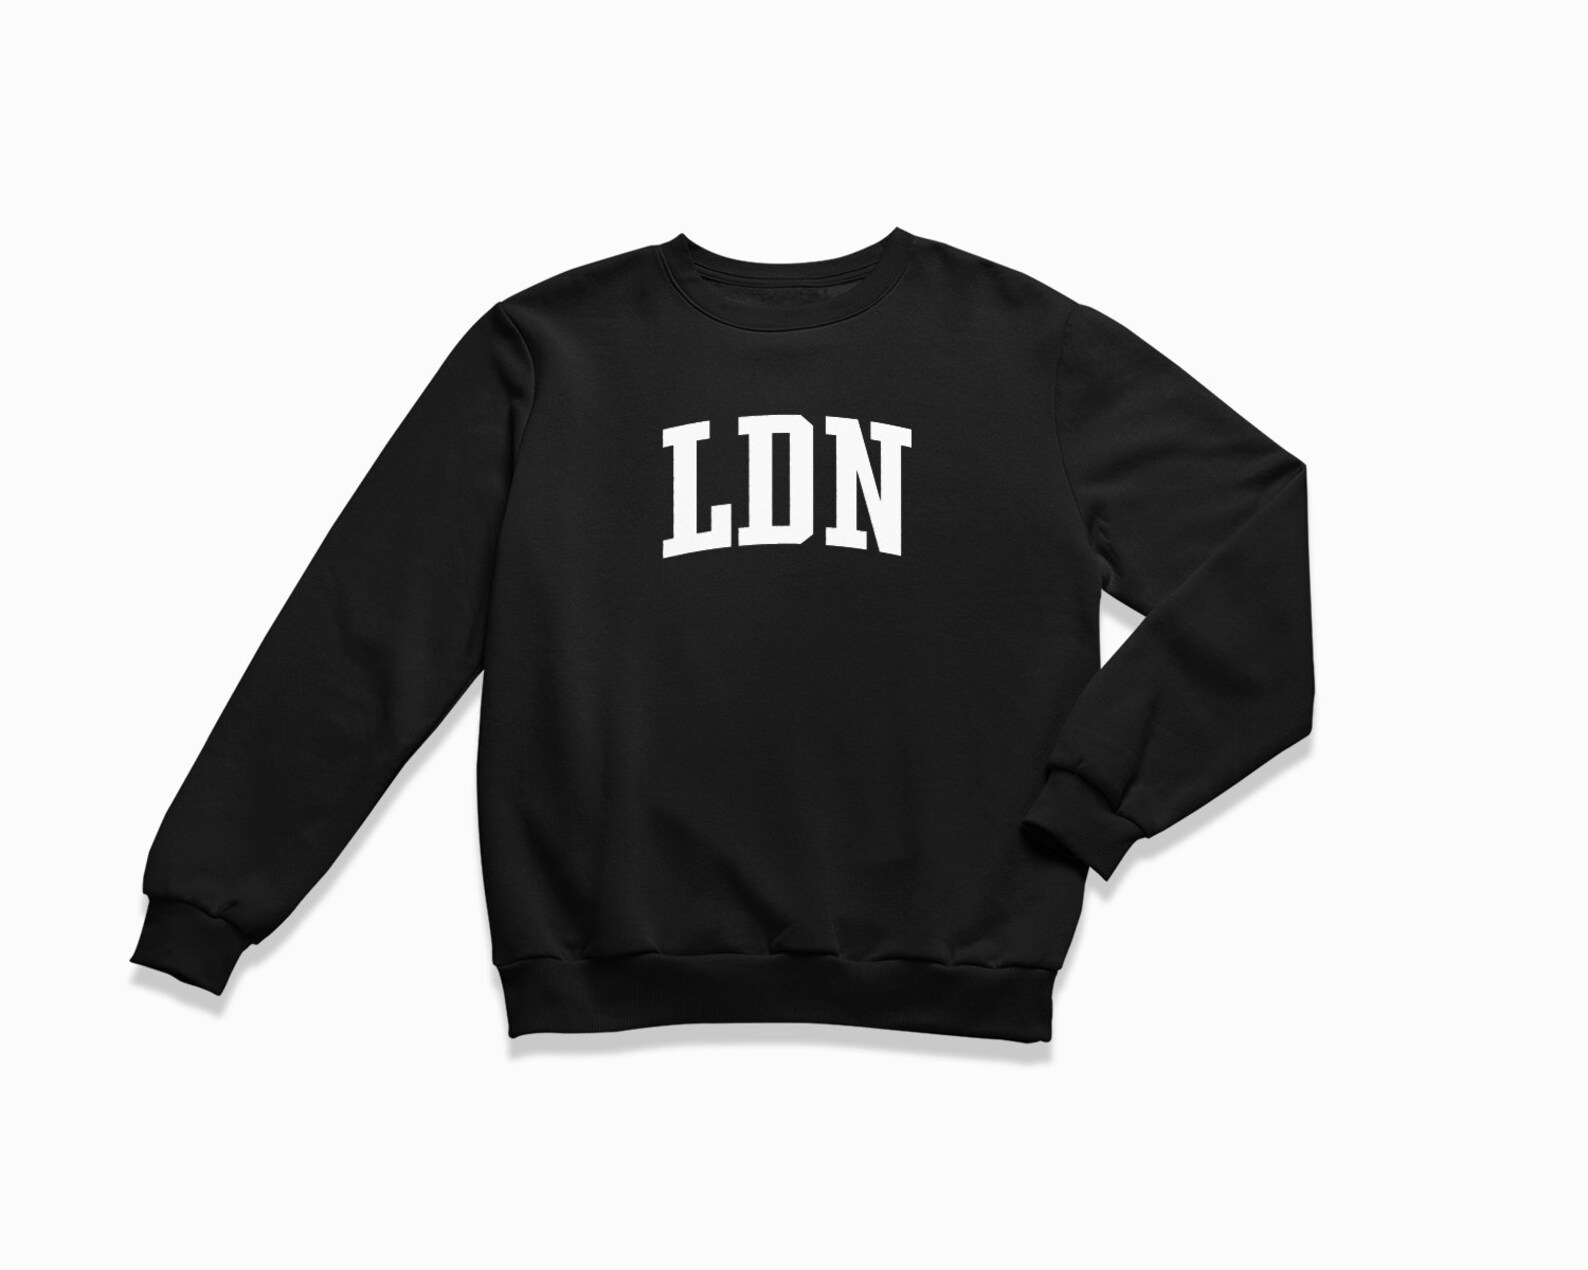 LDN Sweatshirt: London England Crewneck / College Style | Etsy